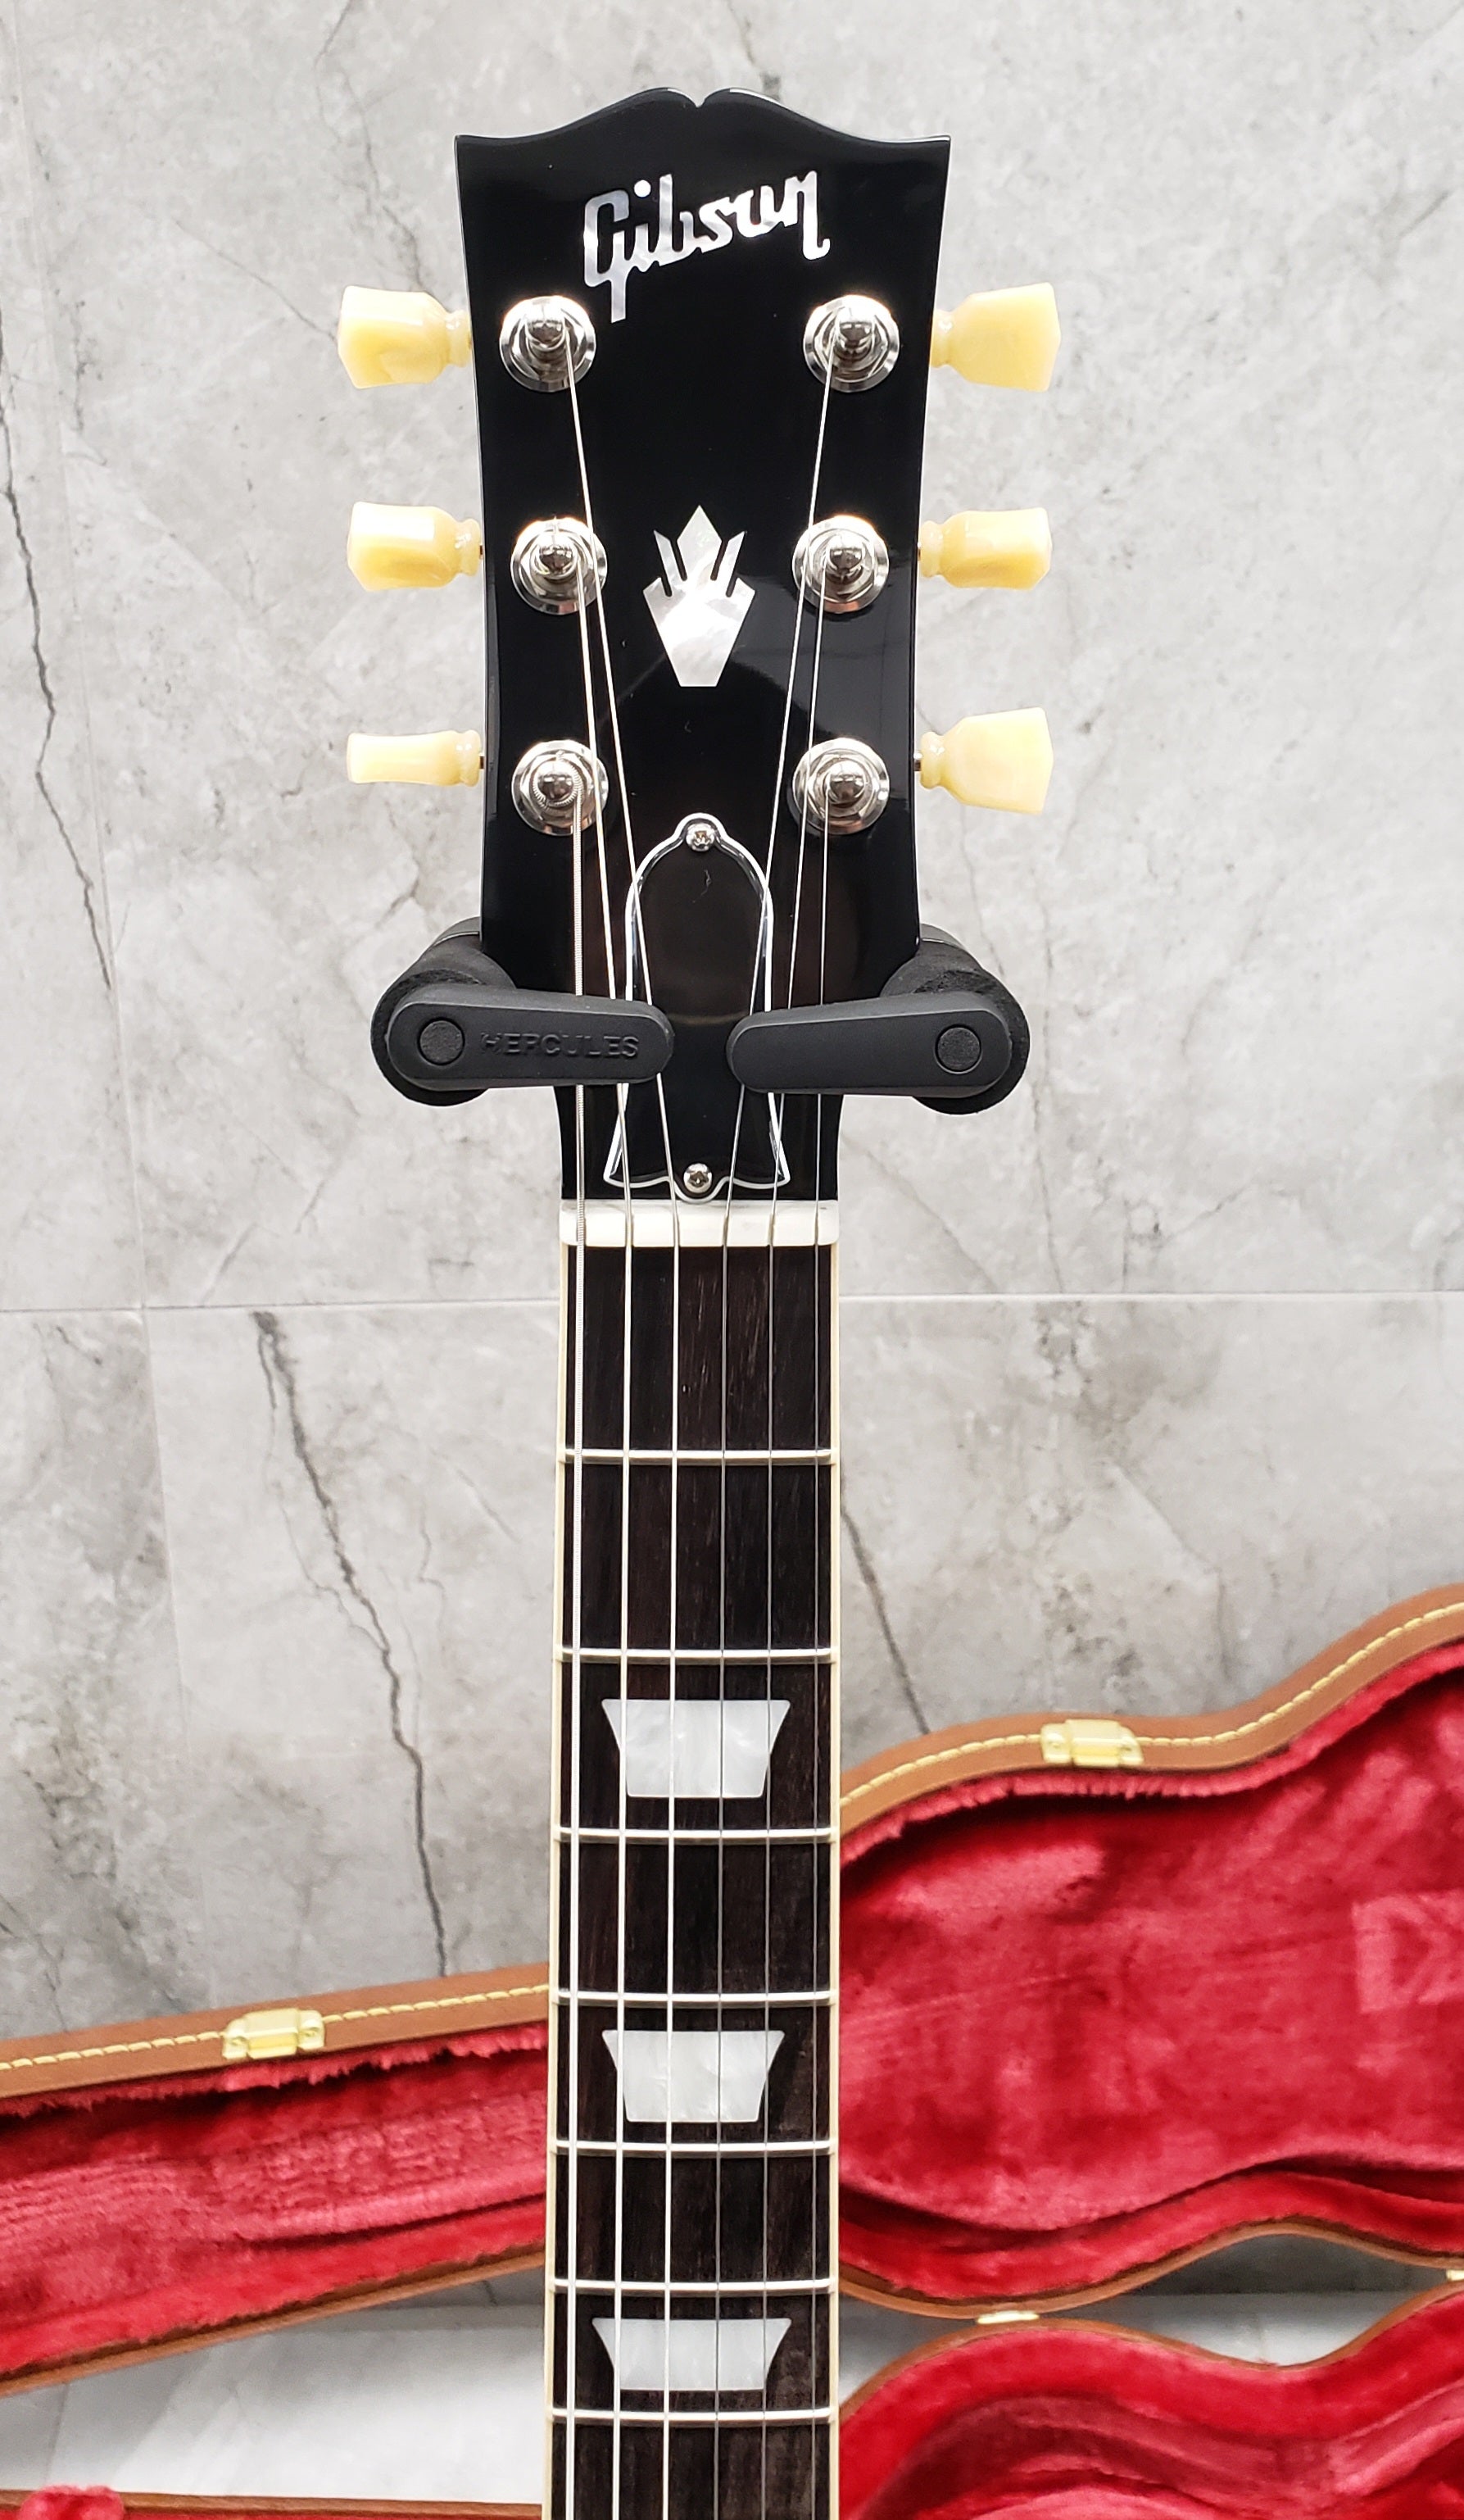 Gibson Standard 61 Sideways Vibrola SG6100VCSN Vintage Cherry SERIAL NUMBER 220120215 - 7.2 LBS